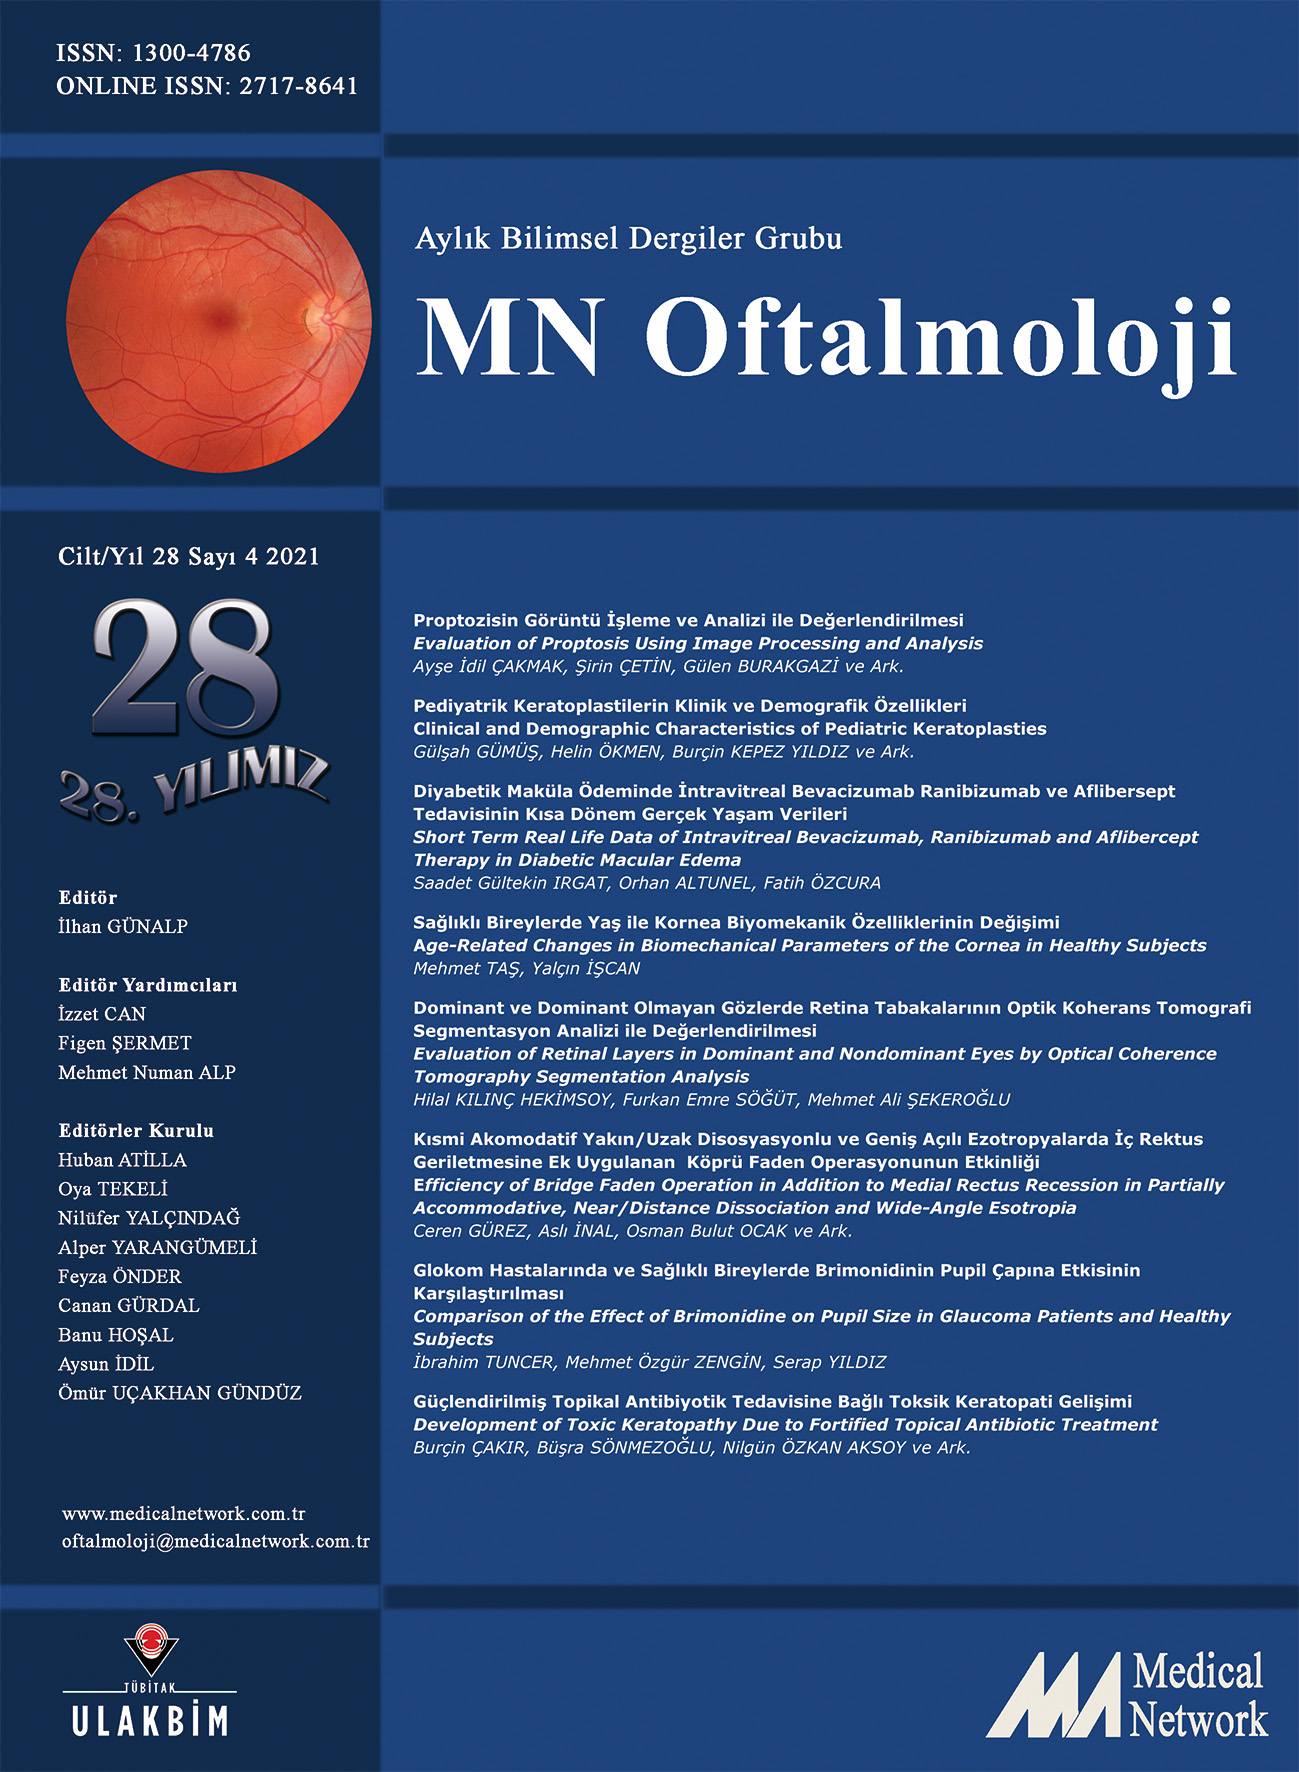 <p>MN Oftalmoloji Cilt: 28 Say: 4 2021 (MN Ophthalmology Volume: 28 No: 4 2021)</p>